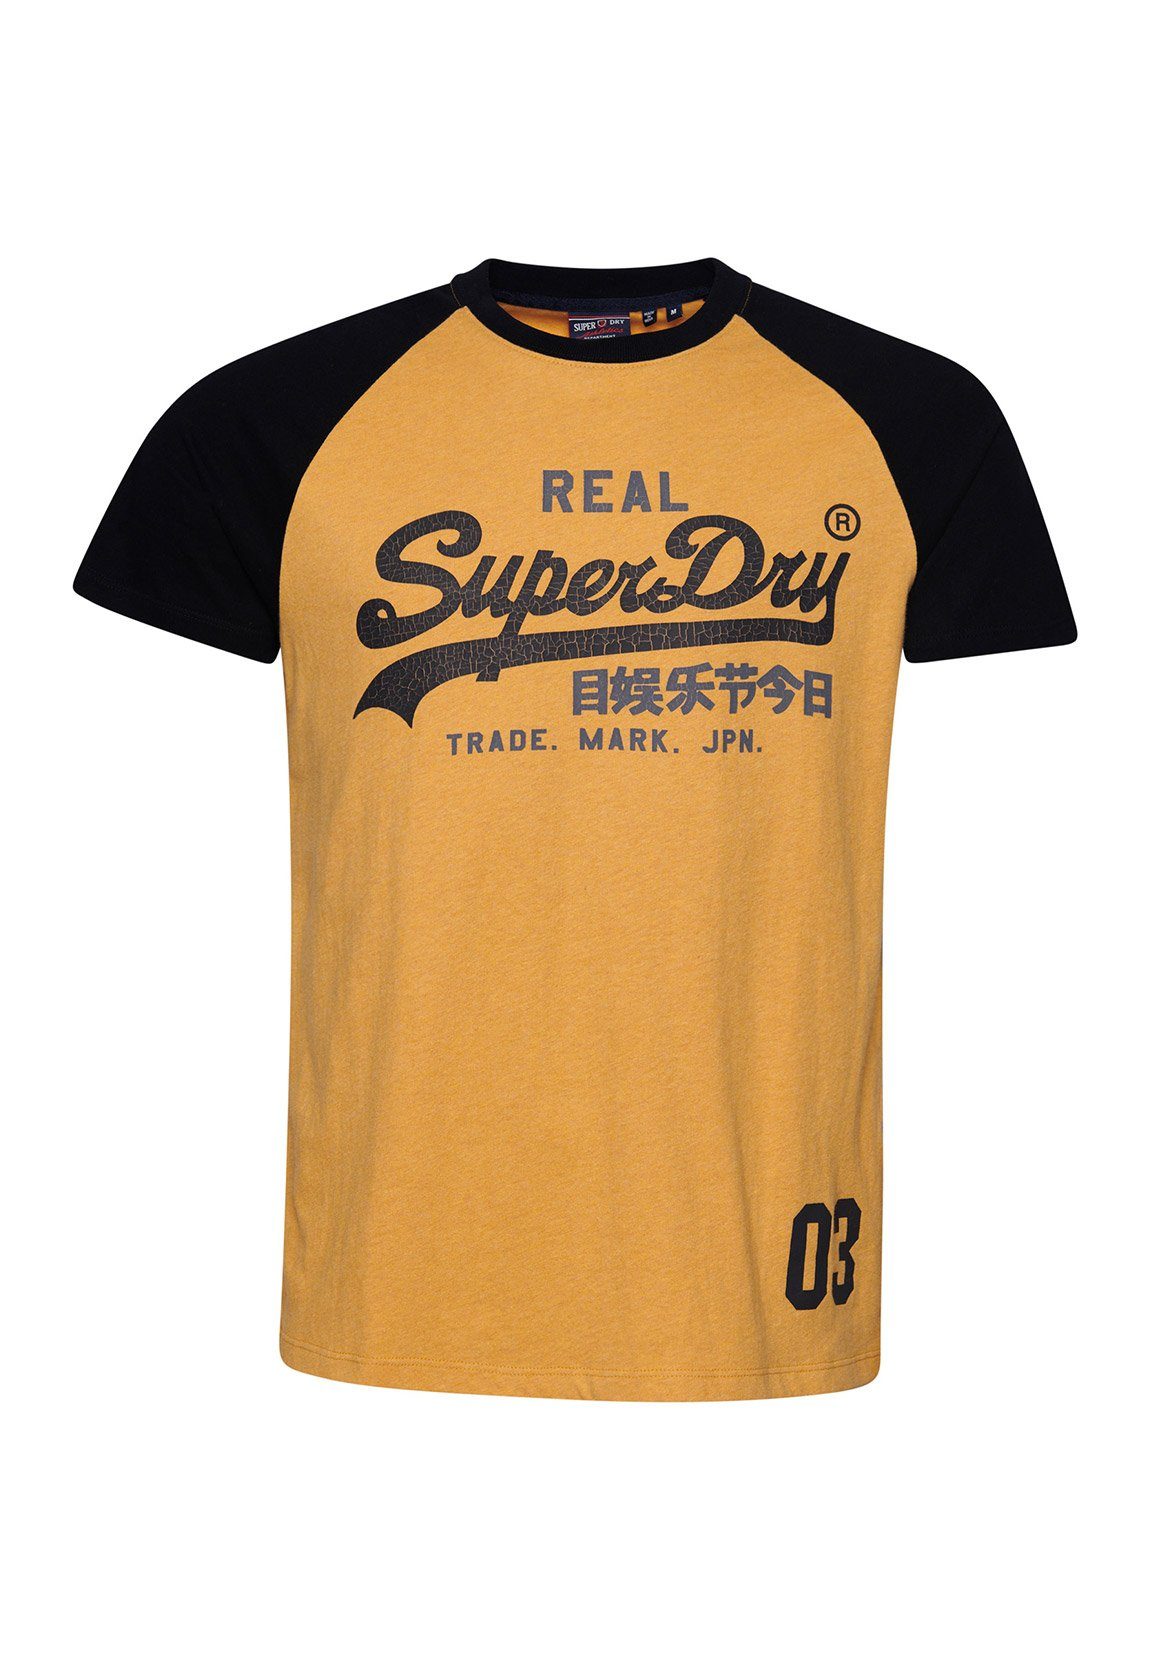 T-Shirt Superdry T-Shirt Yellow TEE Ochre HERITAGE VINTAGE Superdry RGLN Herren VL